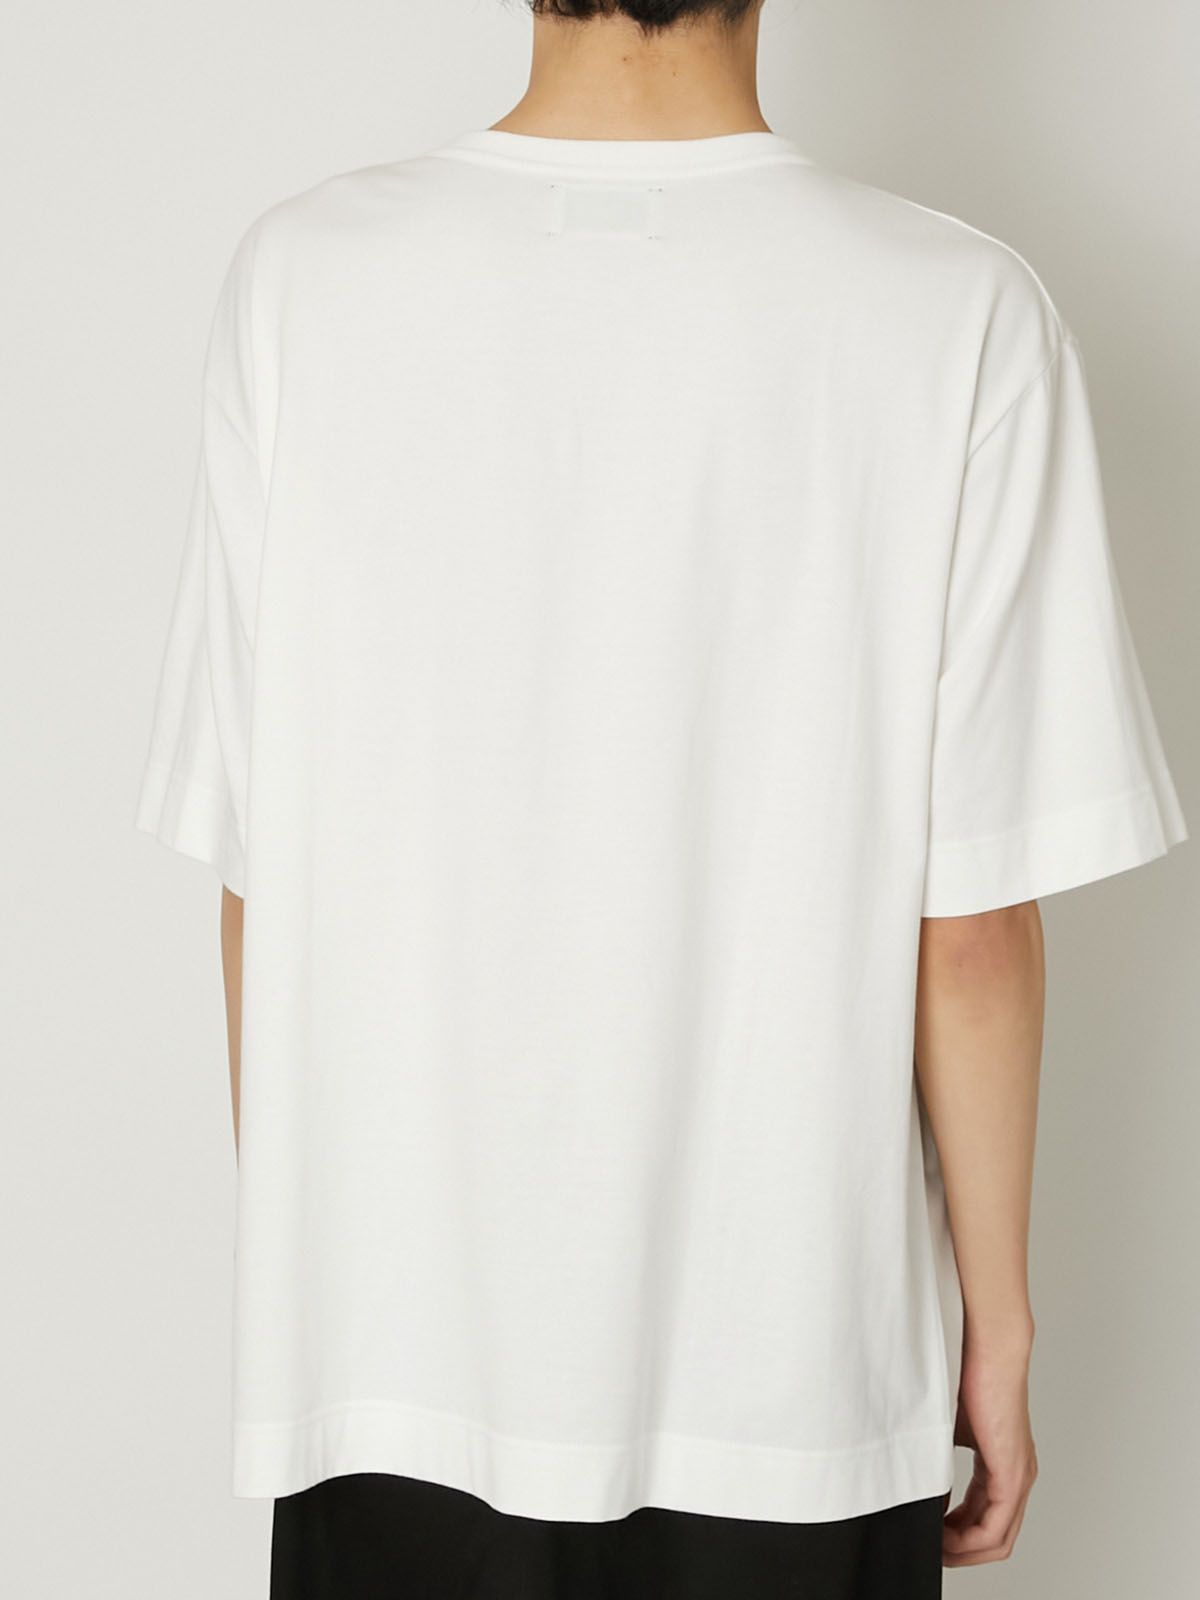 TAAKK - 【ラスト1点】 S/S T-SHIRT / バンダナTシャツ (ホワイト 